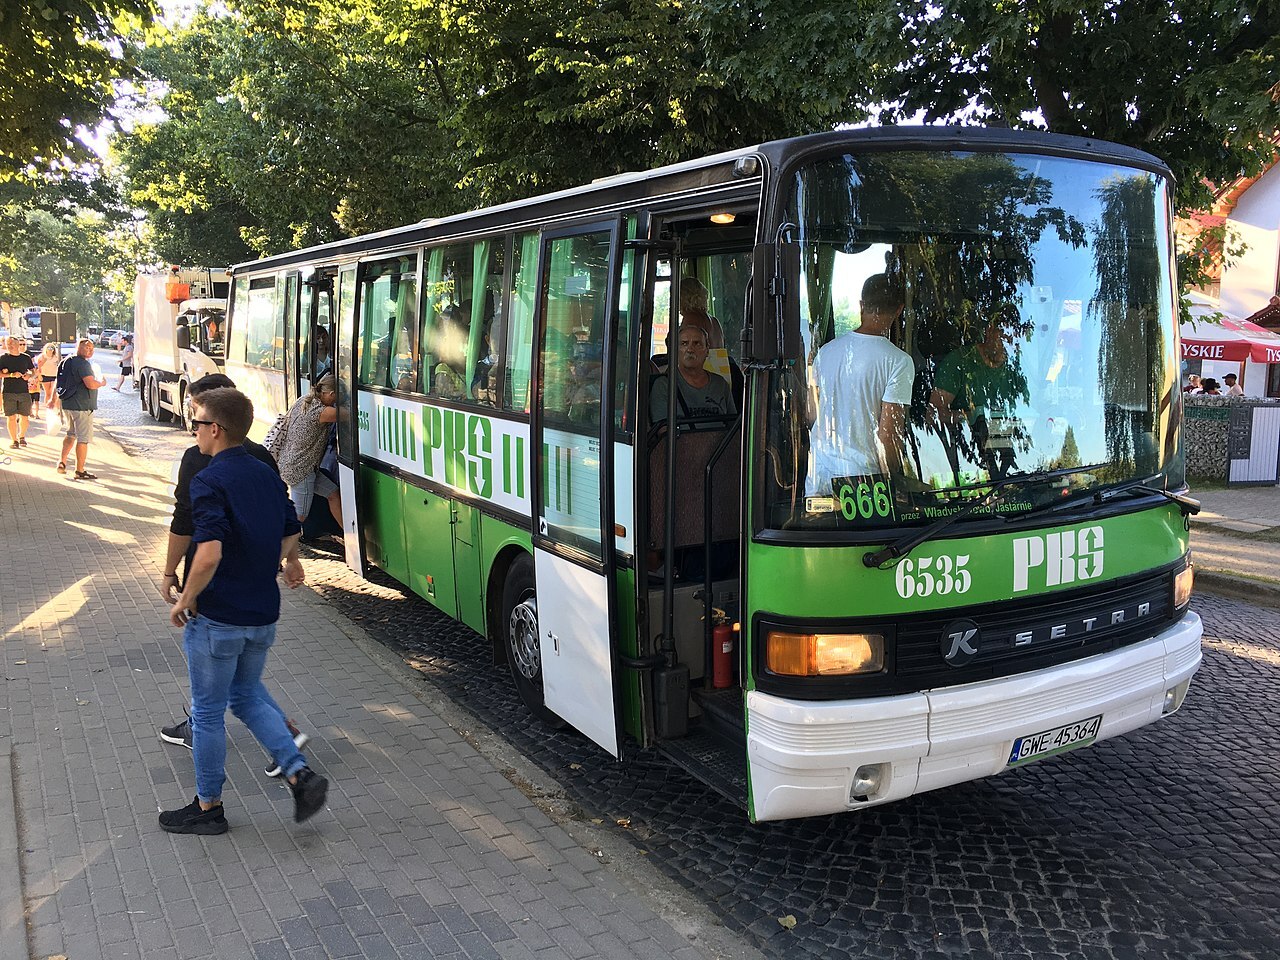 Bus 666 No Longer Goes To Hel, Poland HuffPost Weird News